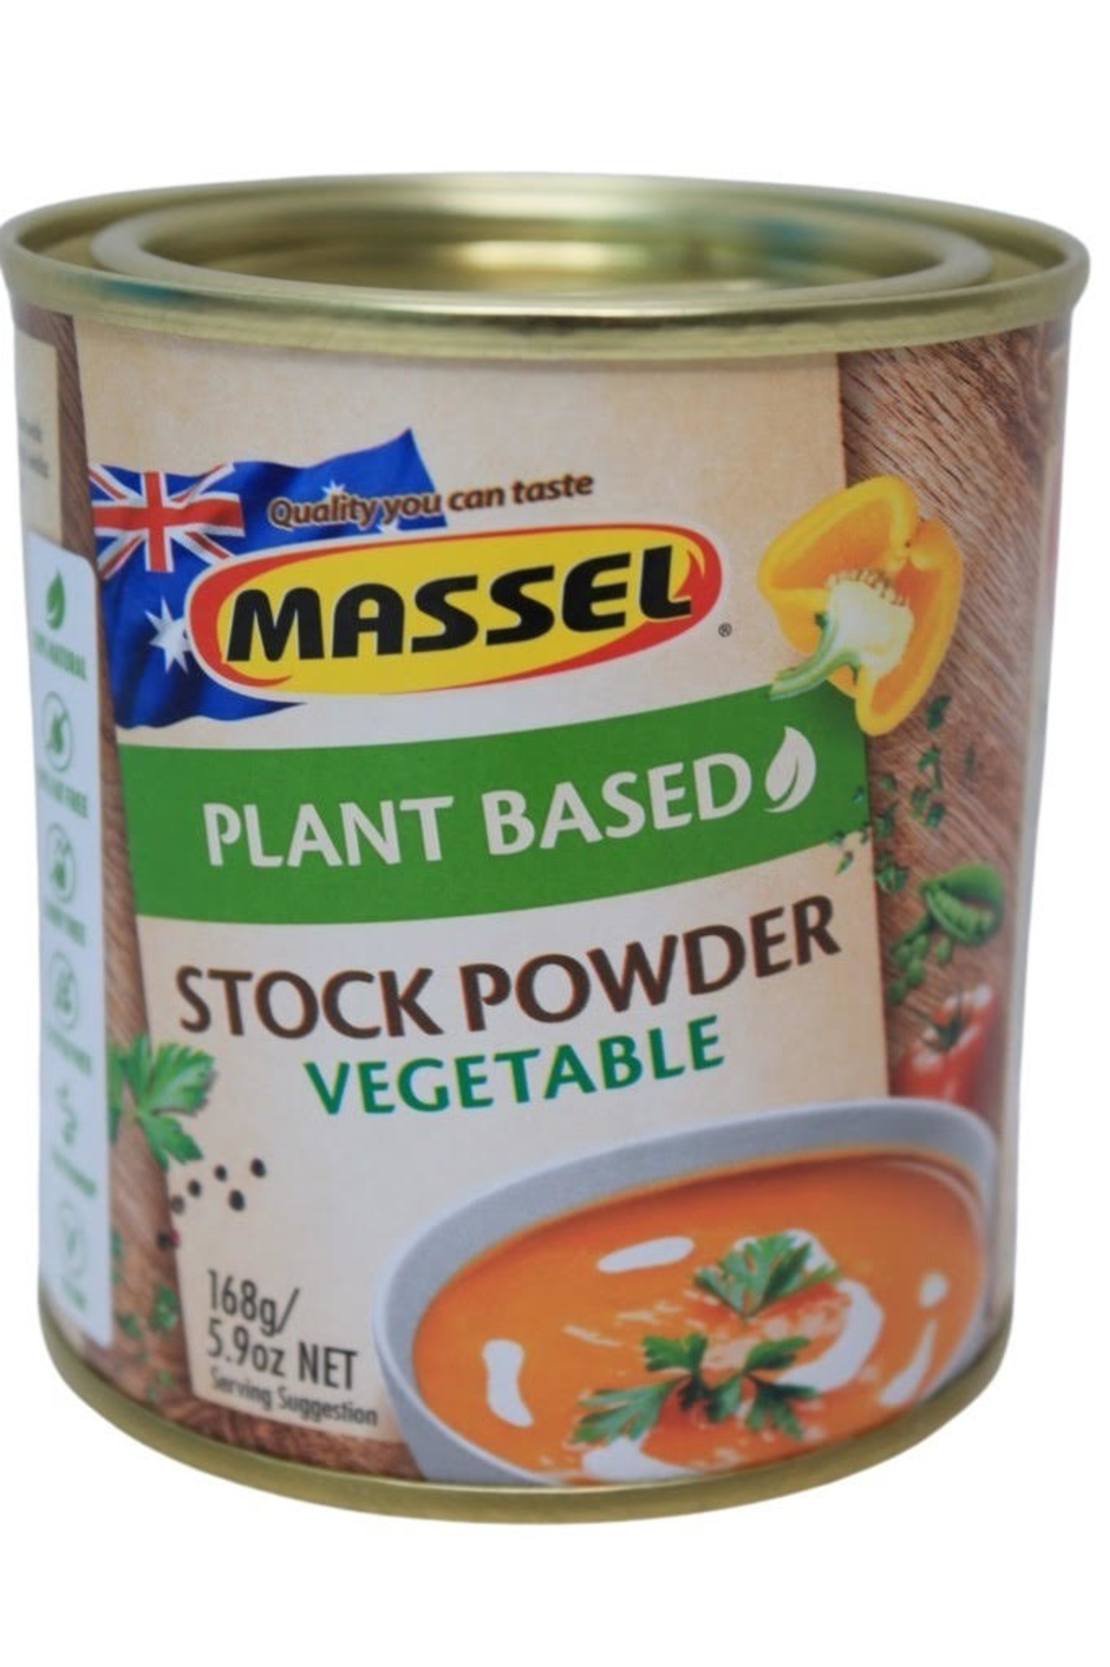 Massel - Stock Powder Vegetable 168g Gluten Free